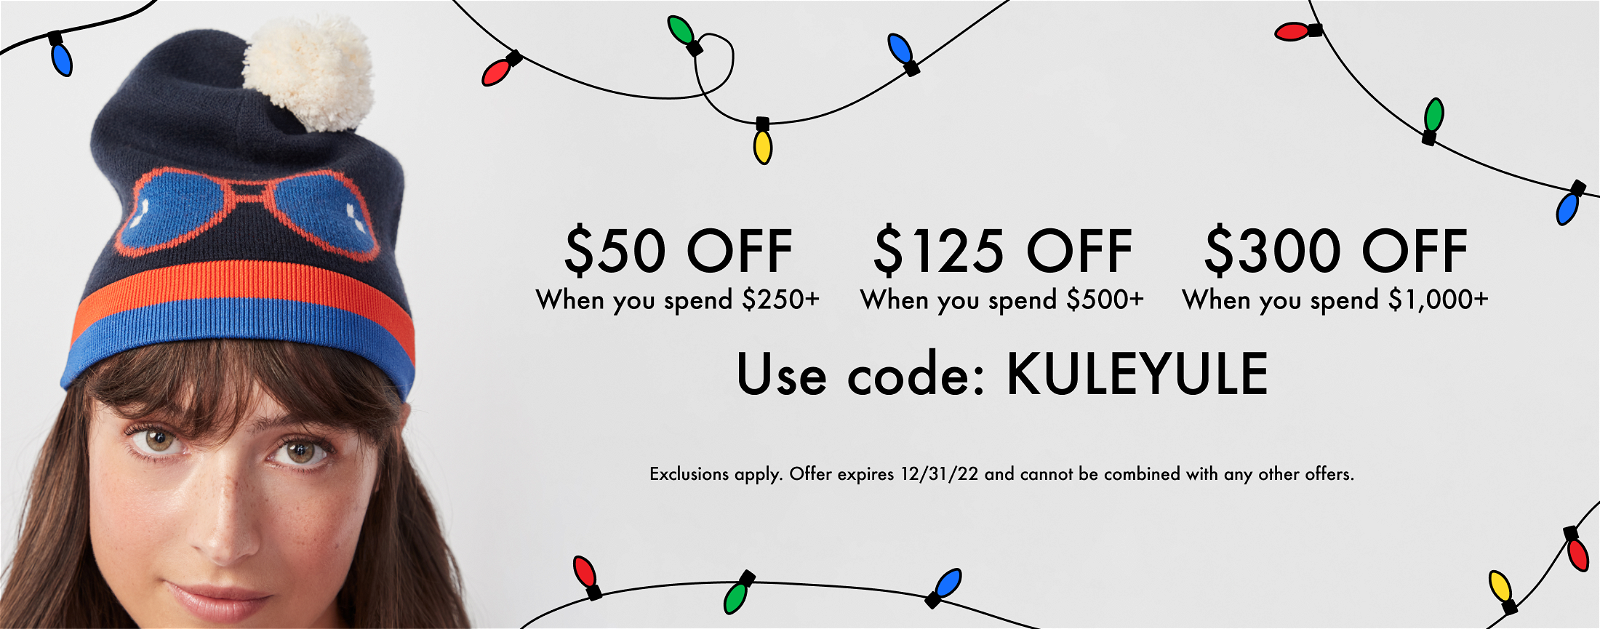 Use Code KULEYULE to save up to $300